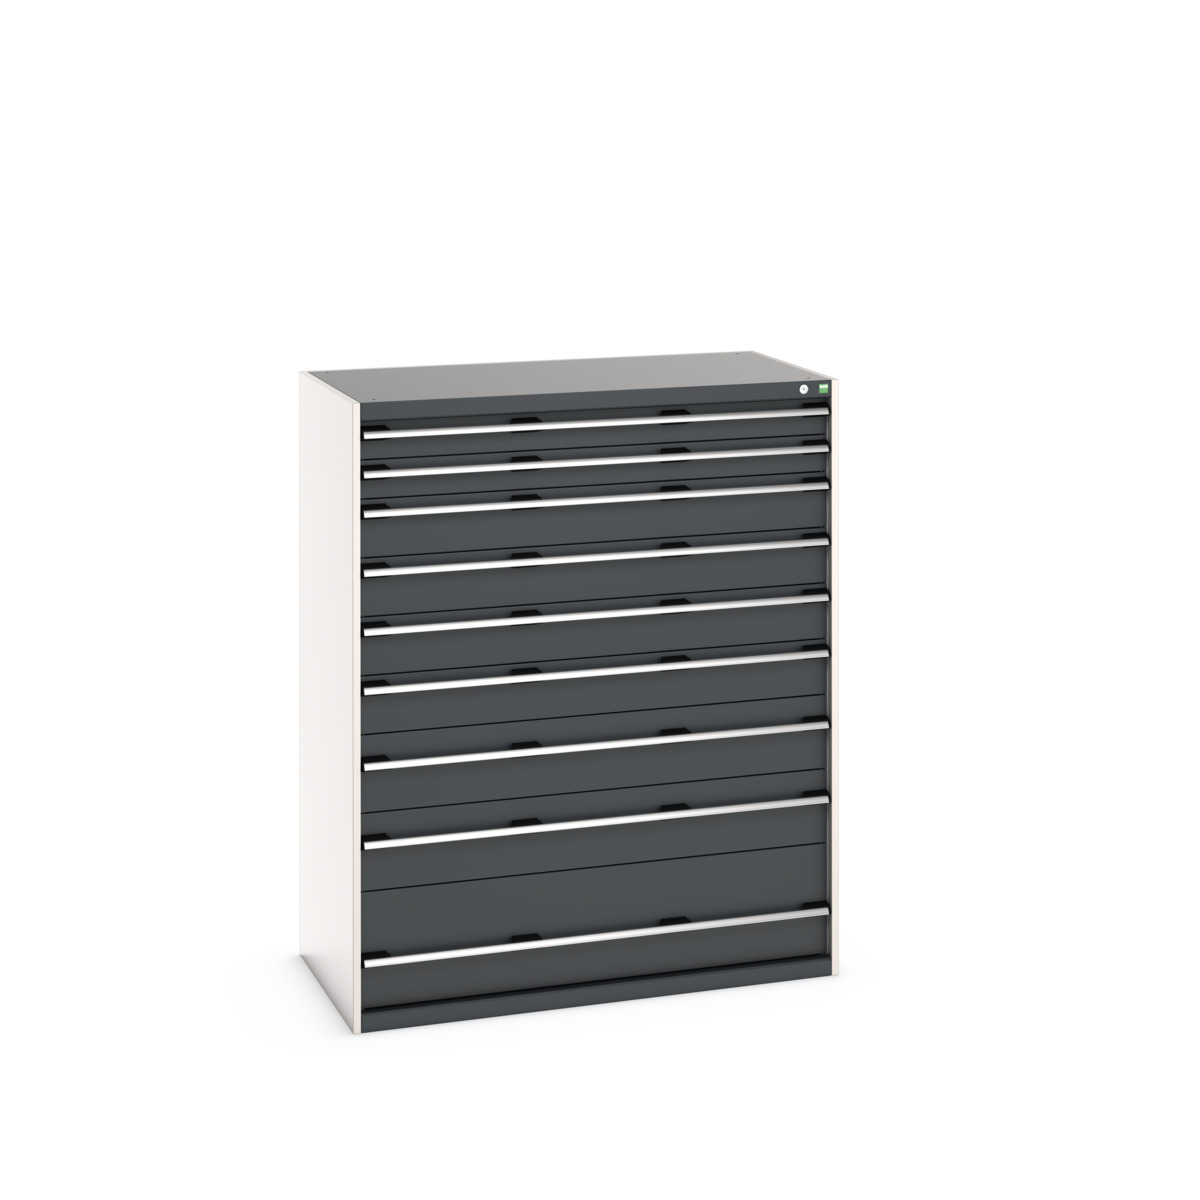 40030076. - cubio drawer cabinet